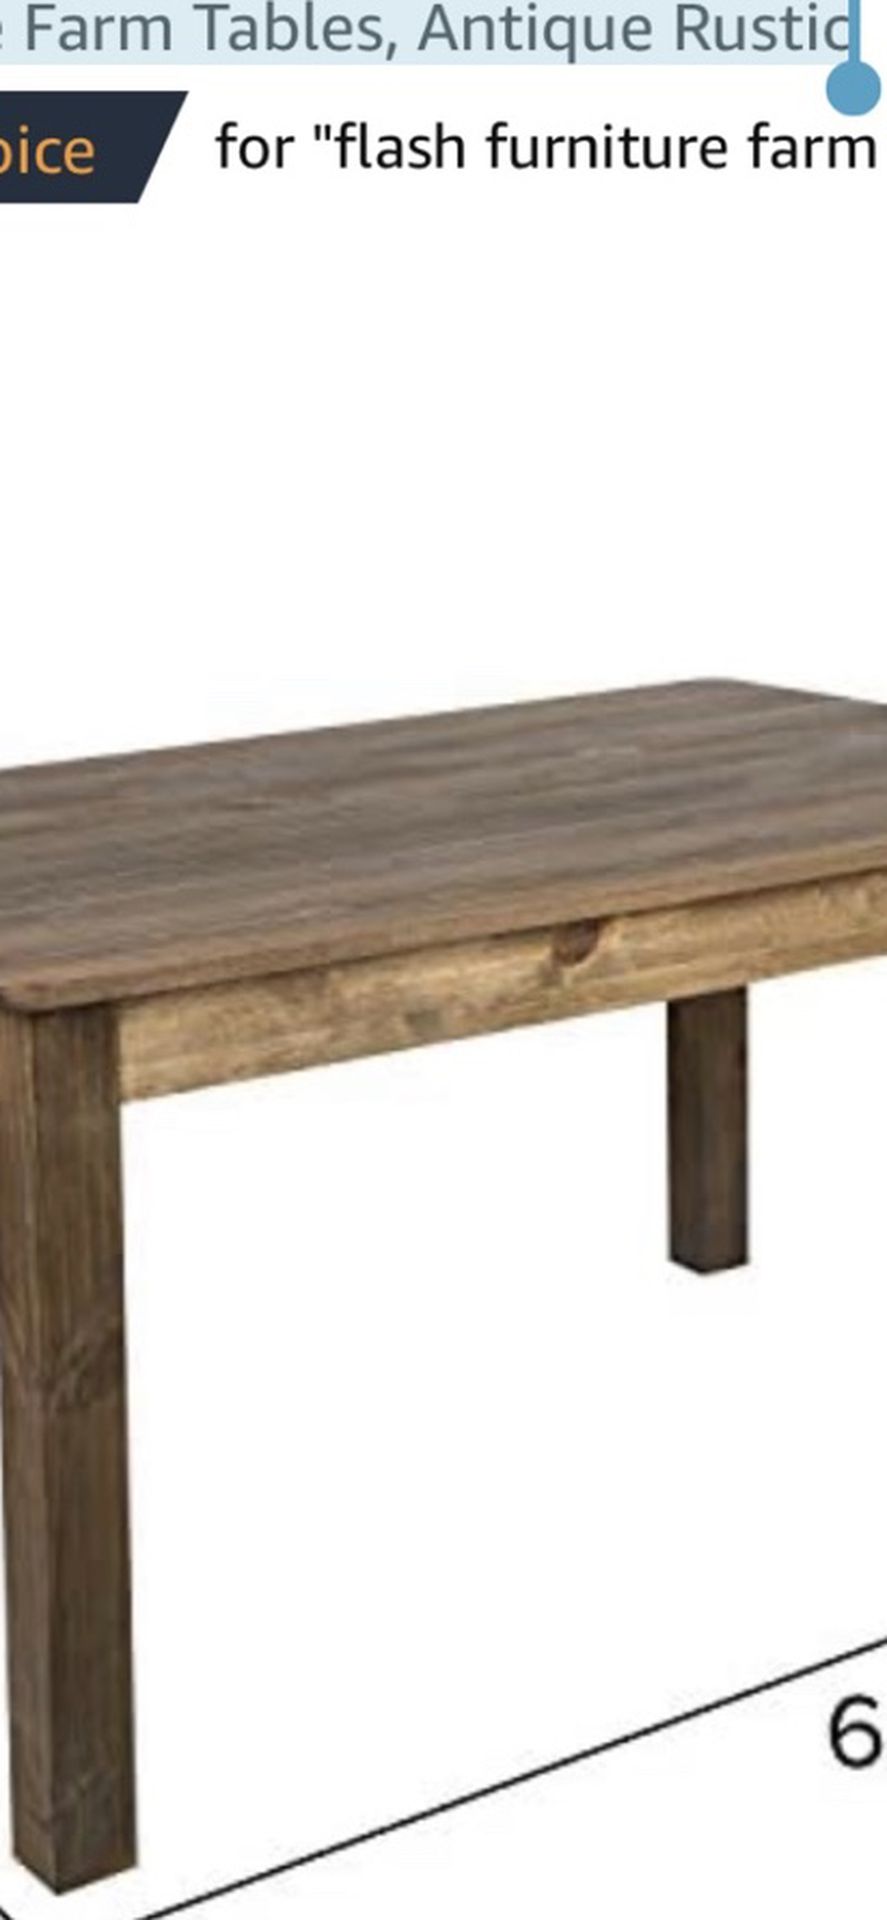 New In Box, Flash Furniture Farm Tables, Antique Rustic